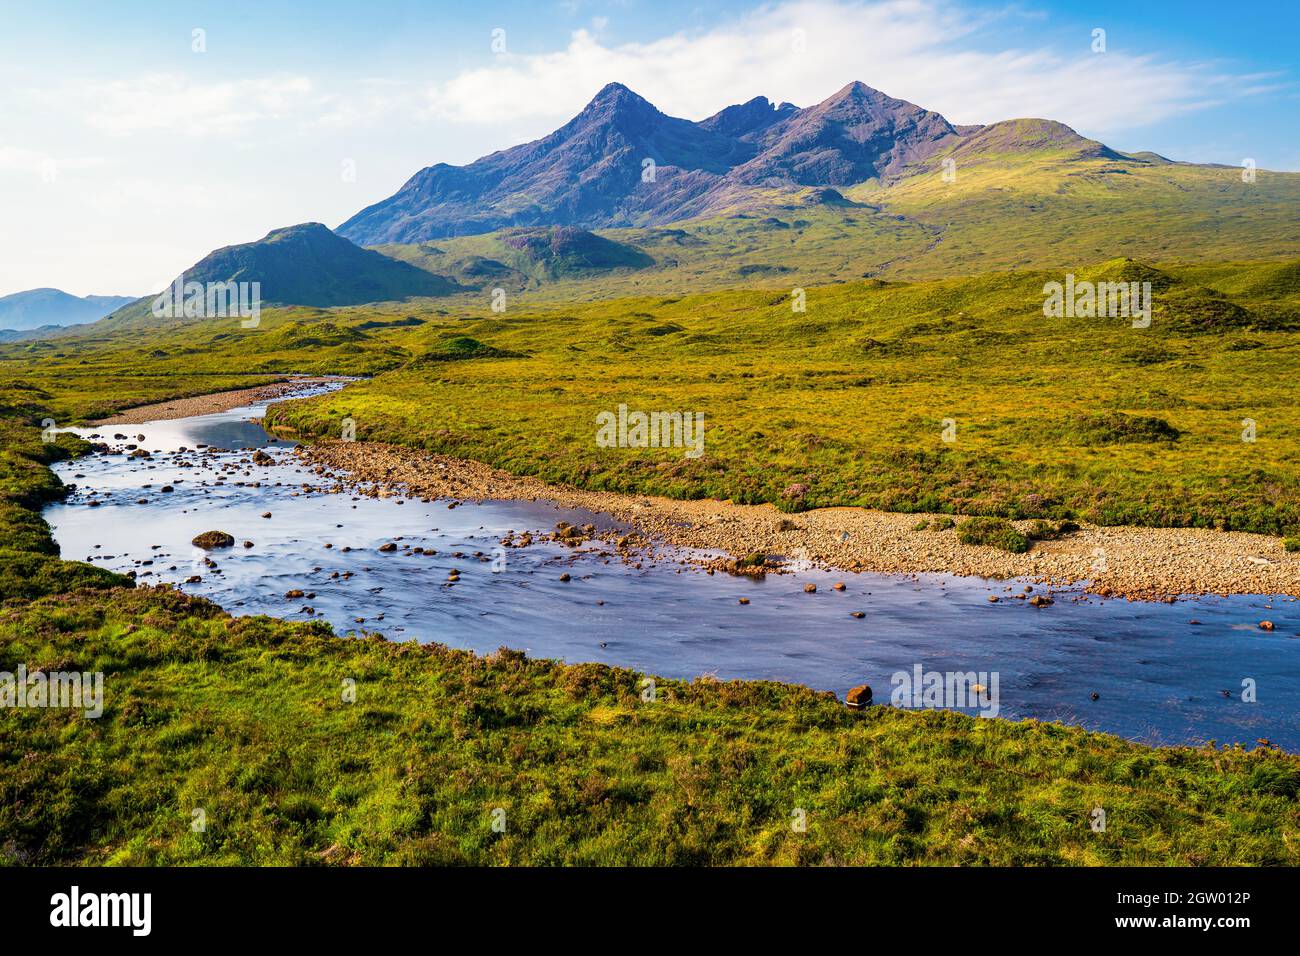 Scotland Isle of Skye - River and Mountain Stock Photo